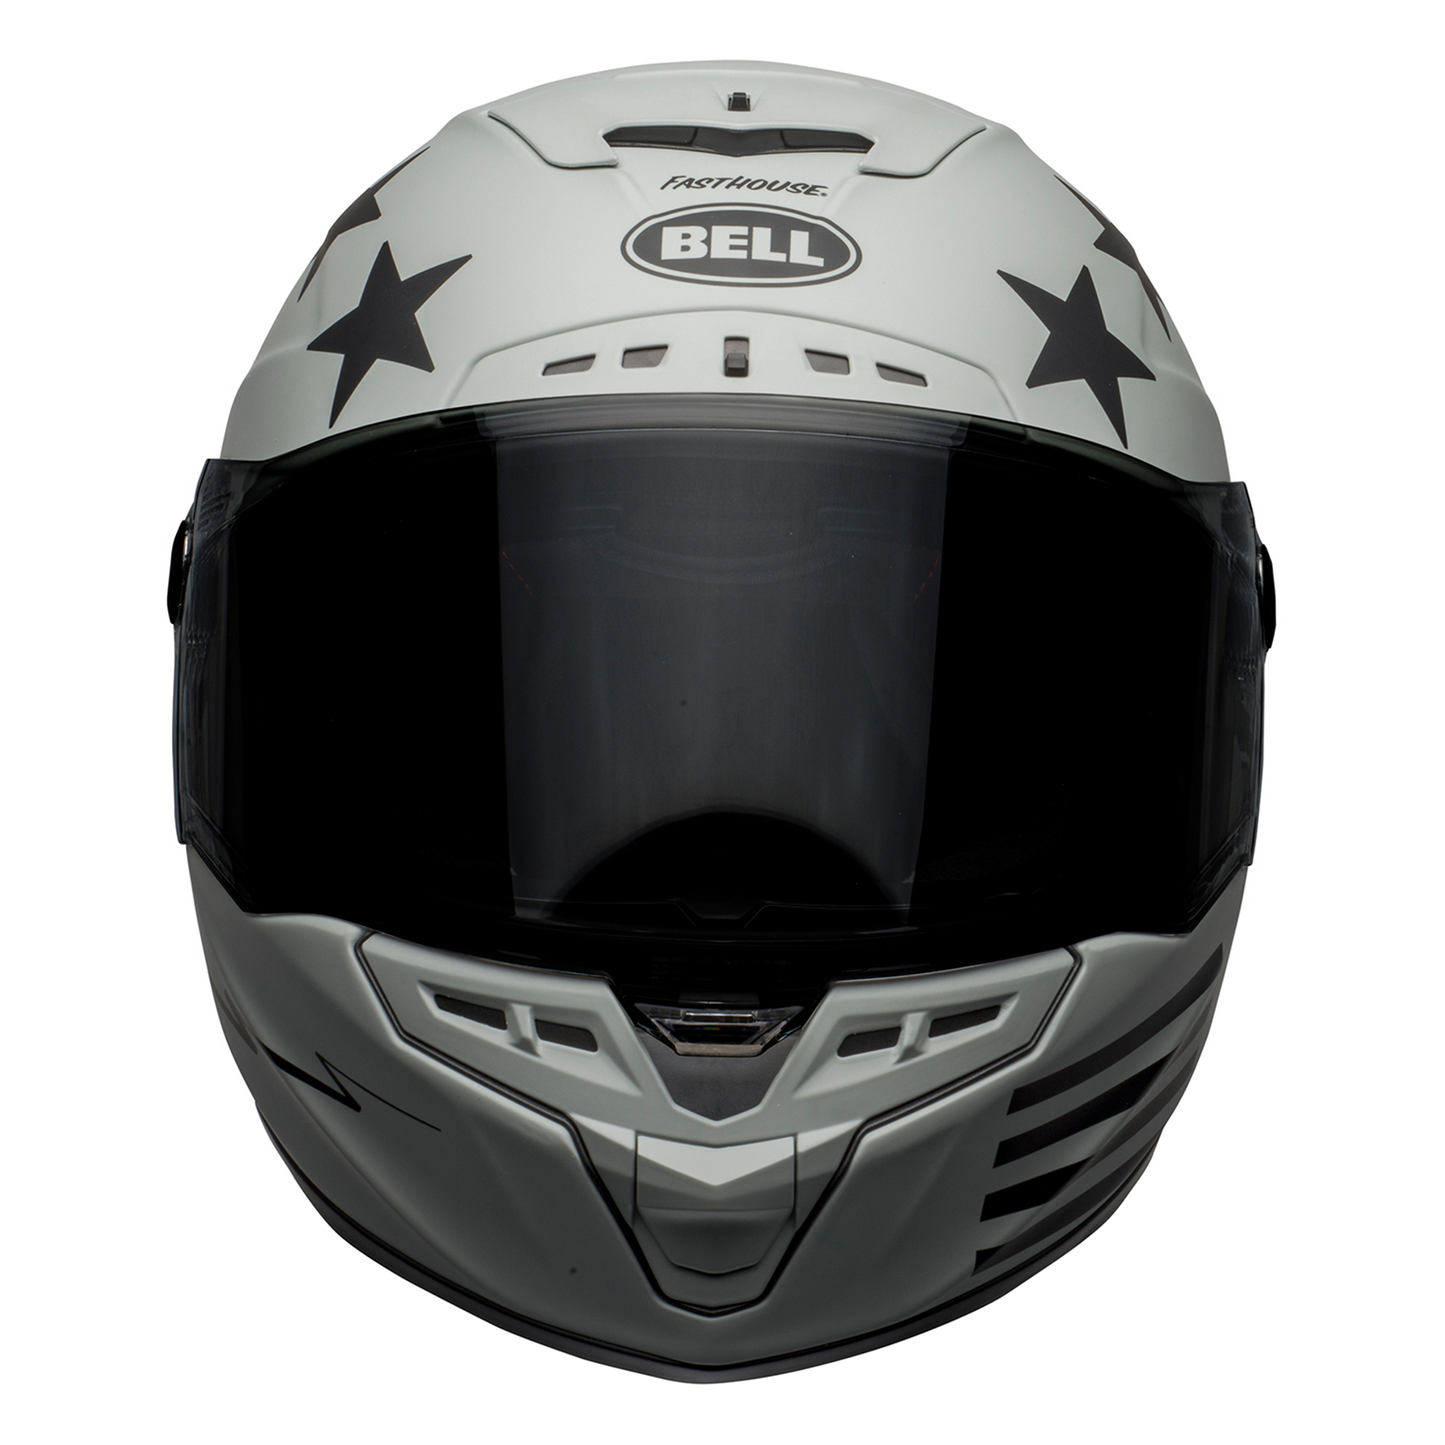 Bell Star DLX MIPS - Fasthouse Matt Grey/Black - Includes Dark Visor